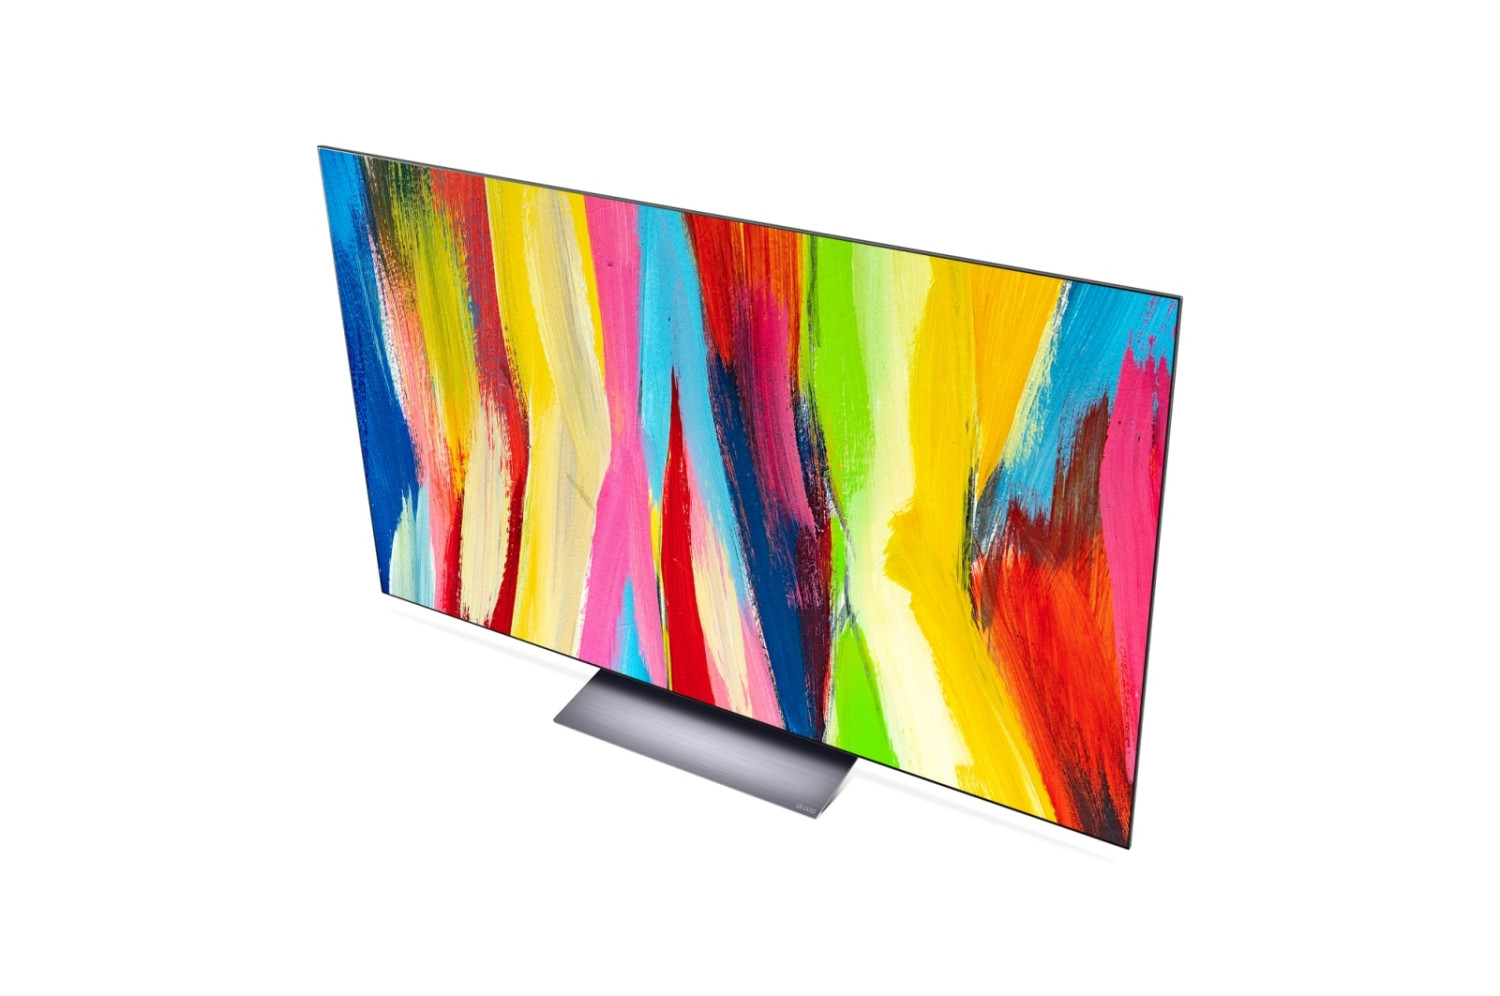 LG OLED evo C2 55" 4K Smart TV OLED55C2 thumbnail